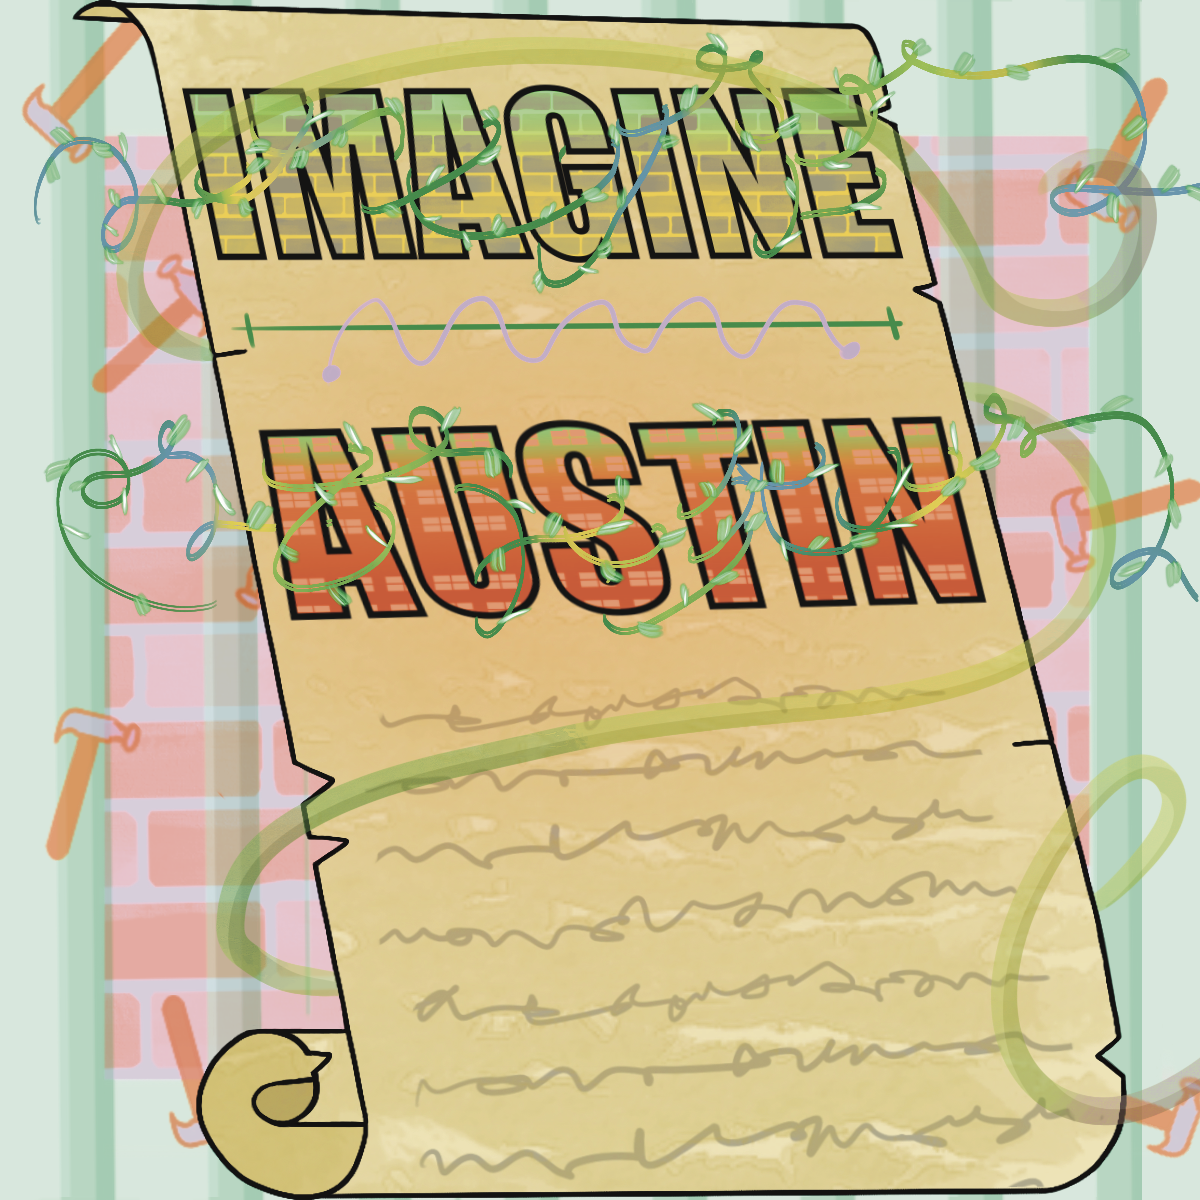 City of Austin set to update Imagine Austin plan